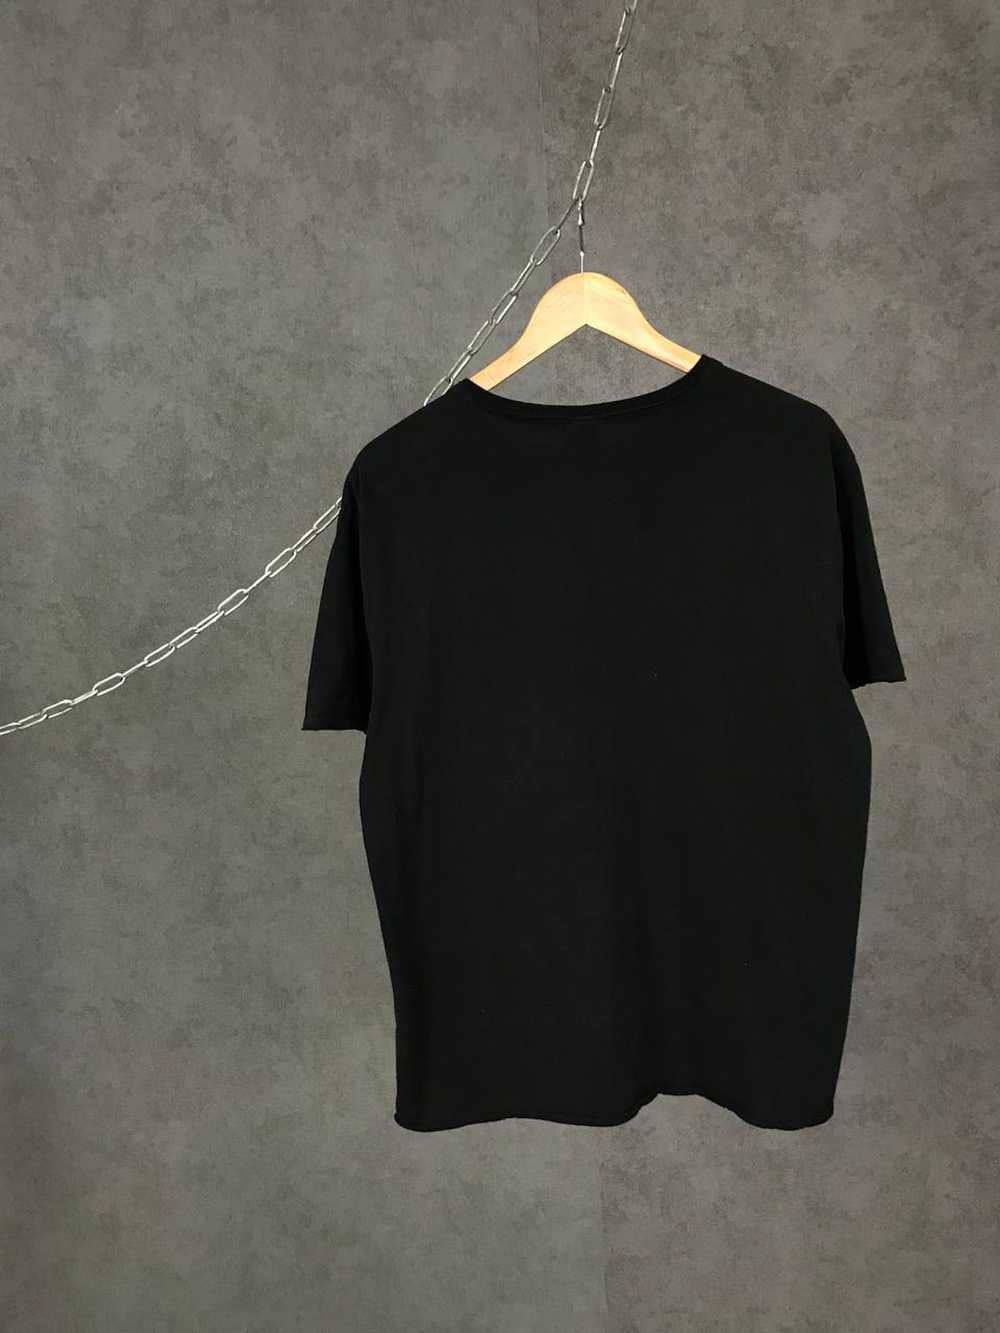 Band Tees × Rock Band × Rock T Shirt System of a … - image 5